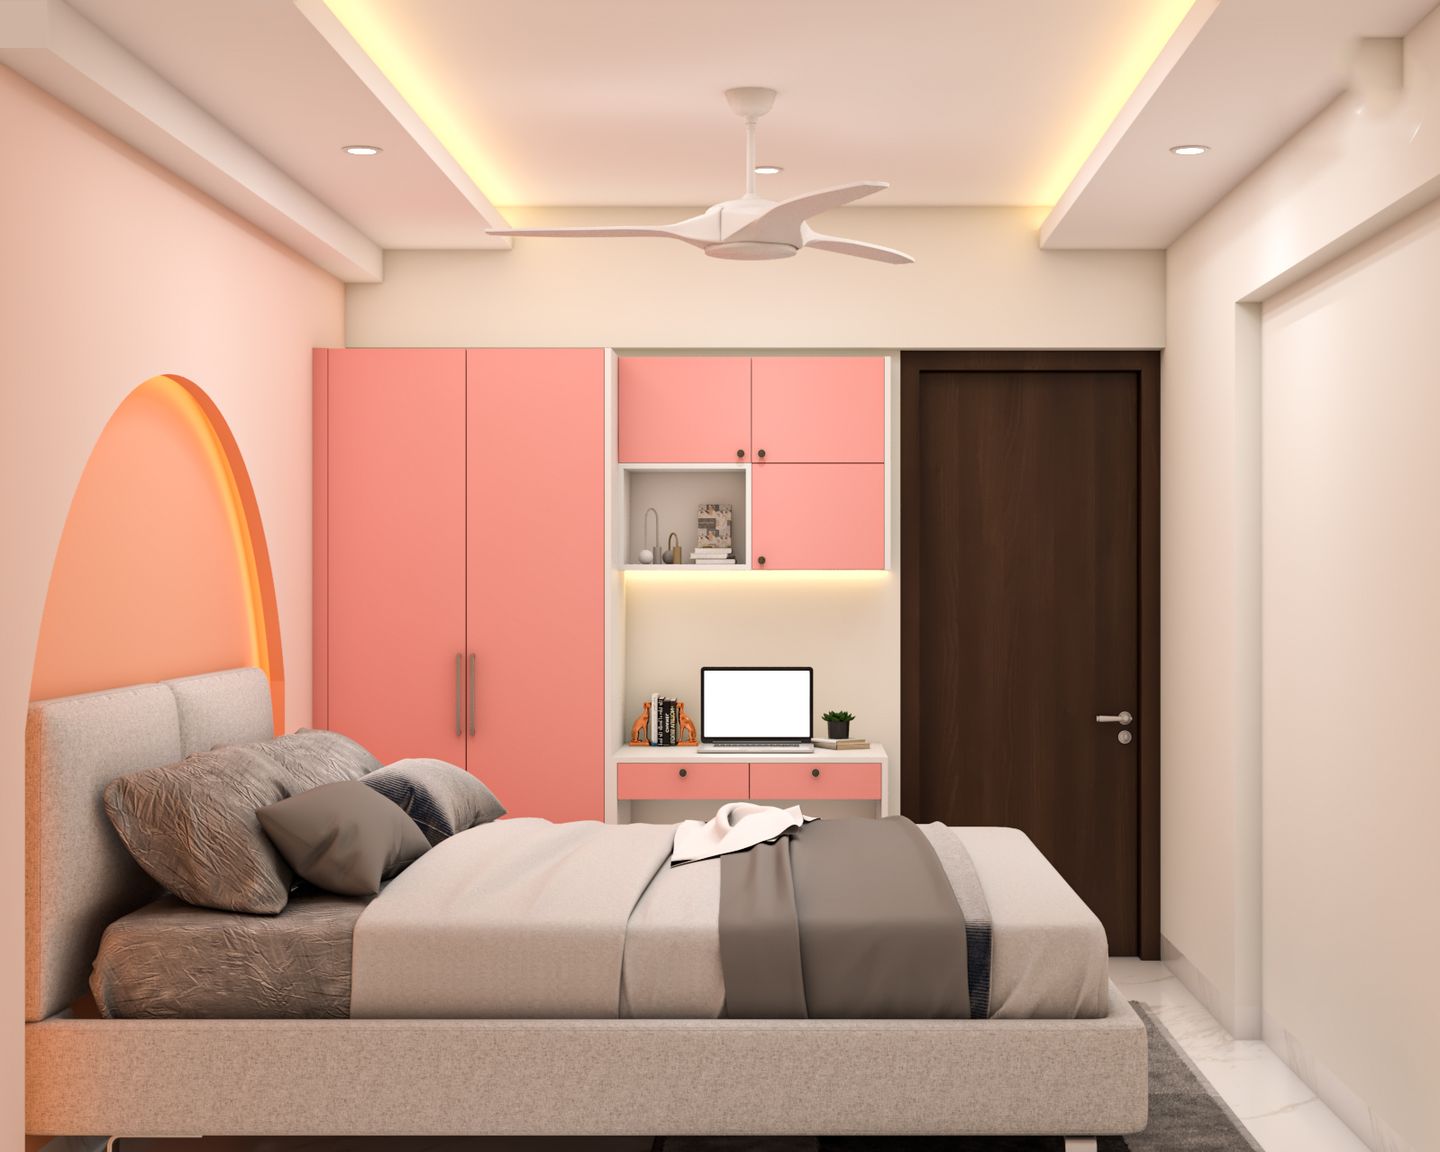 10X8 Ft Bedroom False Ceiling Design - Livspace